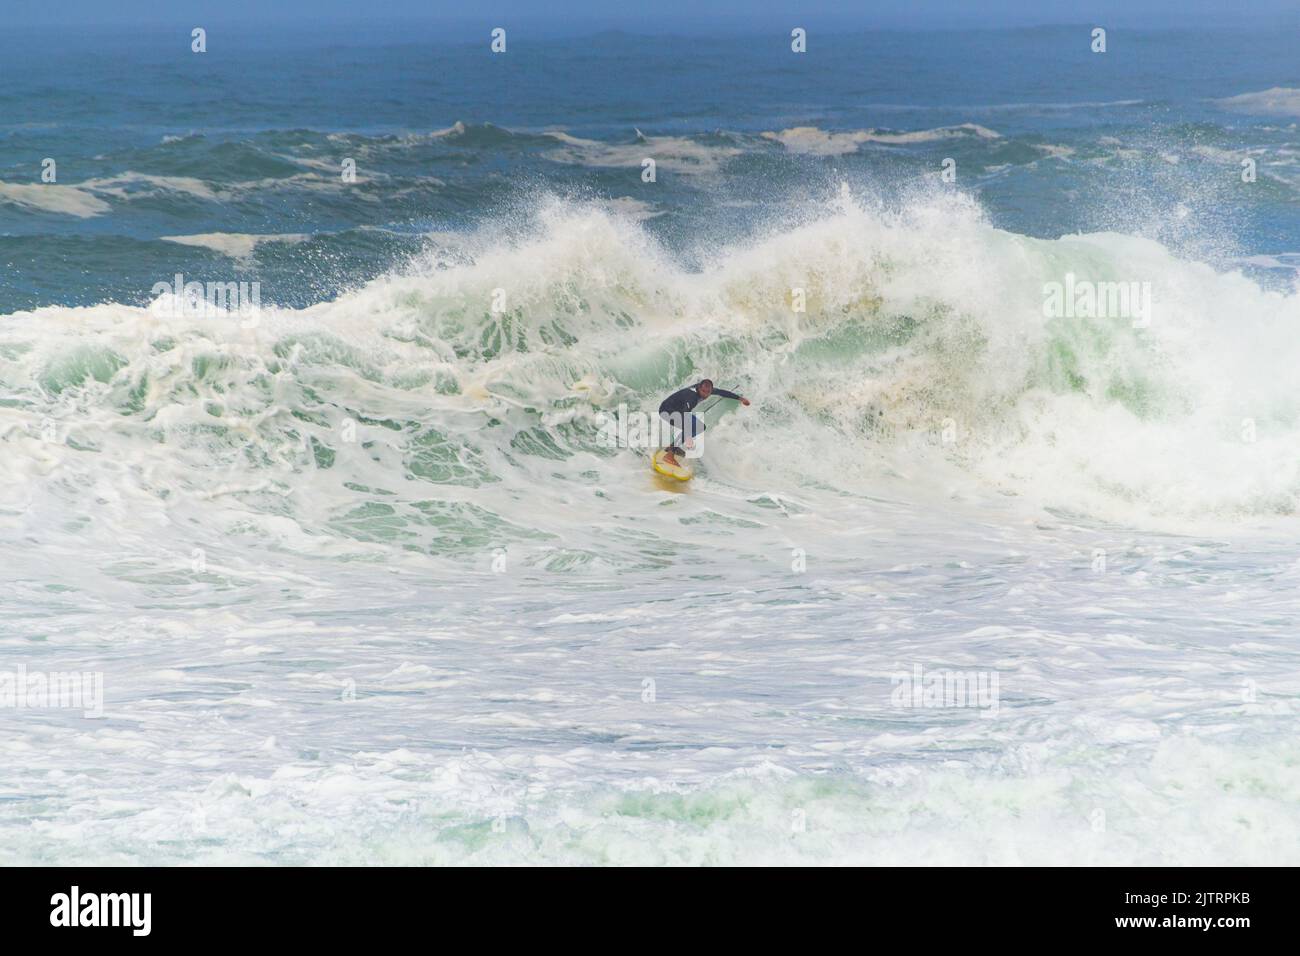 surfer riding a wave at leblon beach in Rio de Janeiro, Brazil - April 5, 2020: surfer riding a big wave during the surf that hit the city of Rio de J Stock Photo